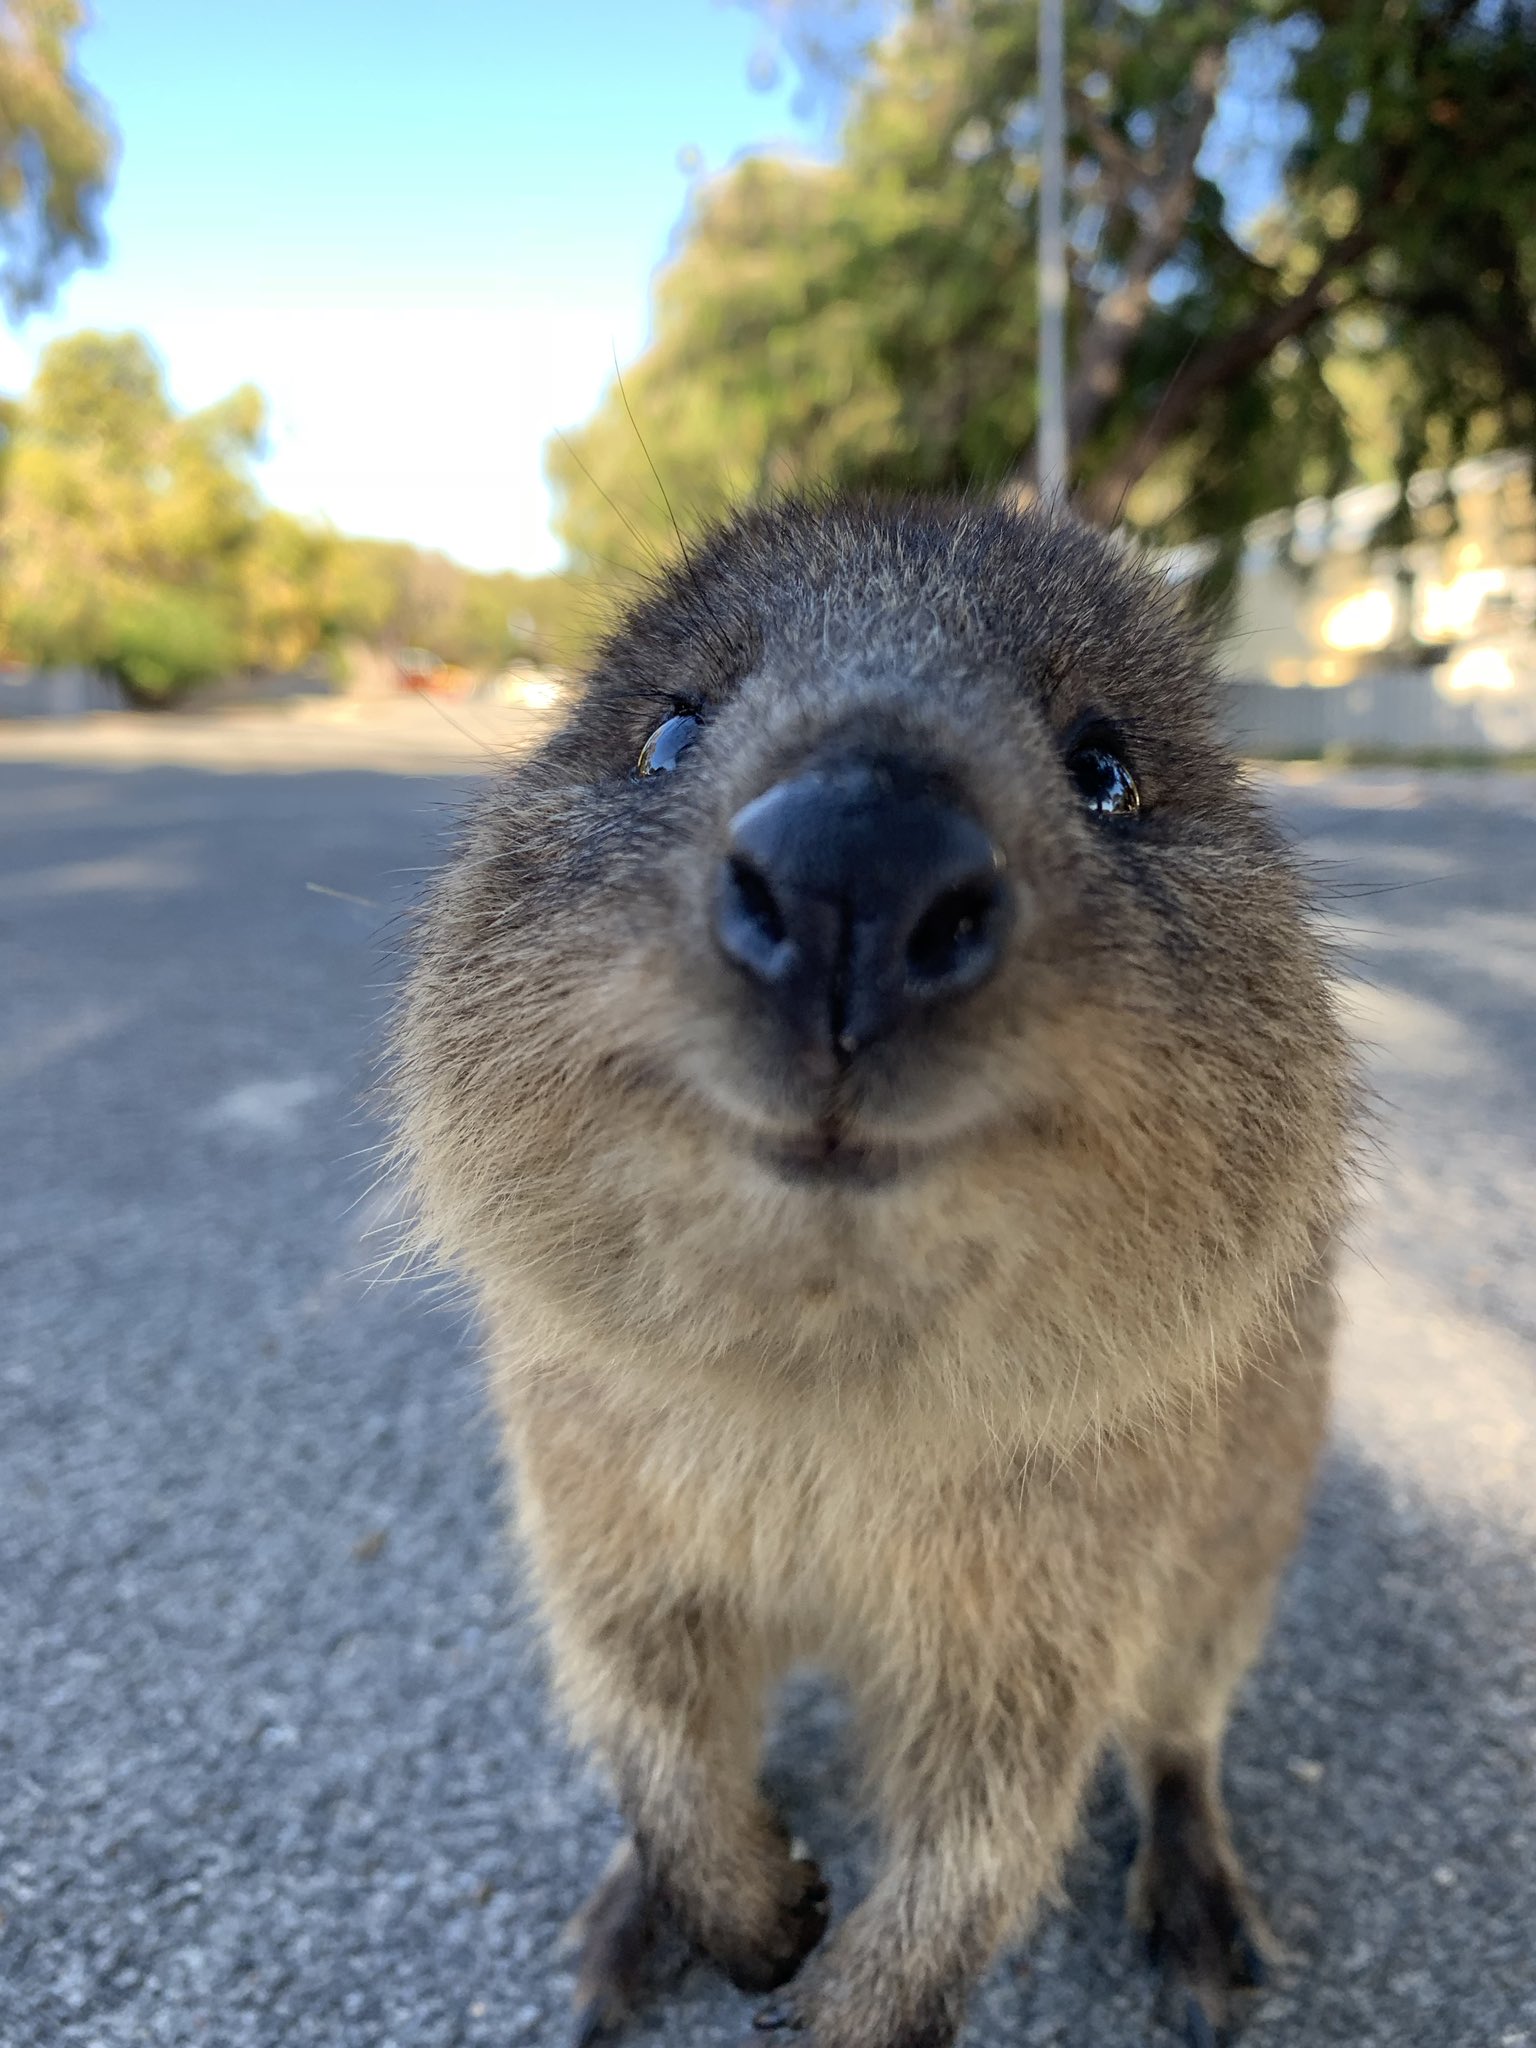 Dtpn Metal ﾄﾞｺﾓﾛ座ｷﾞｬﾗｸｼｰ Twitter પર 今日も朝からクアッカワラビーちゃんを追いかけるんるん 幸せ動物 クアッカワラビー Quokka ロットネスト島 Rotnestisland Australia